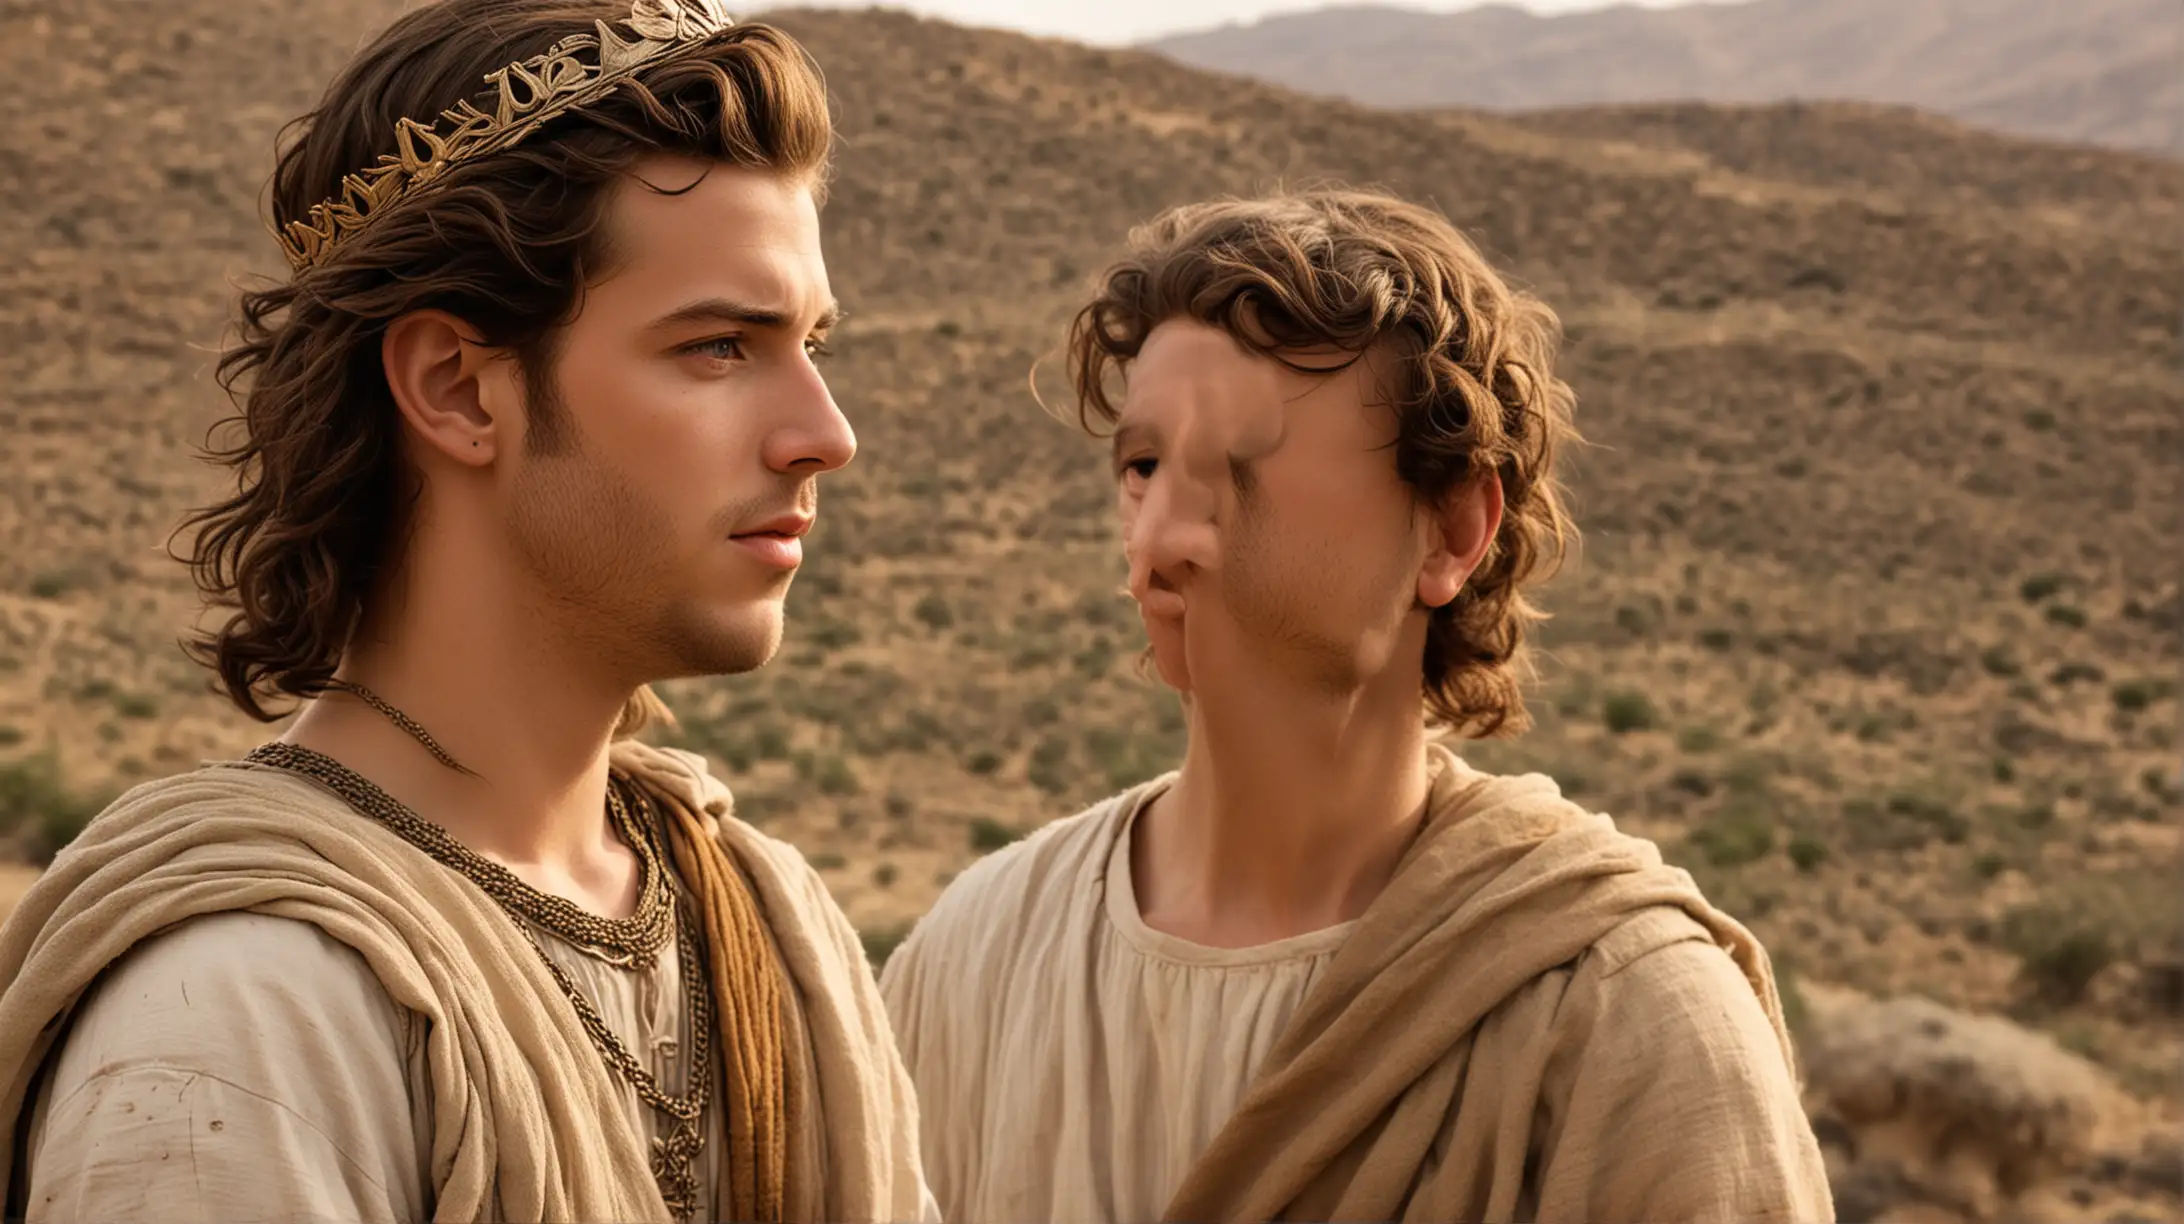 Biblical Era Young King David Conversing with Jonathon in Desert Landscape